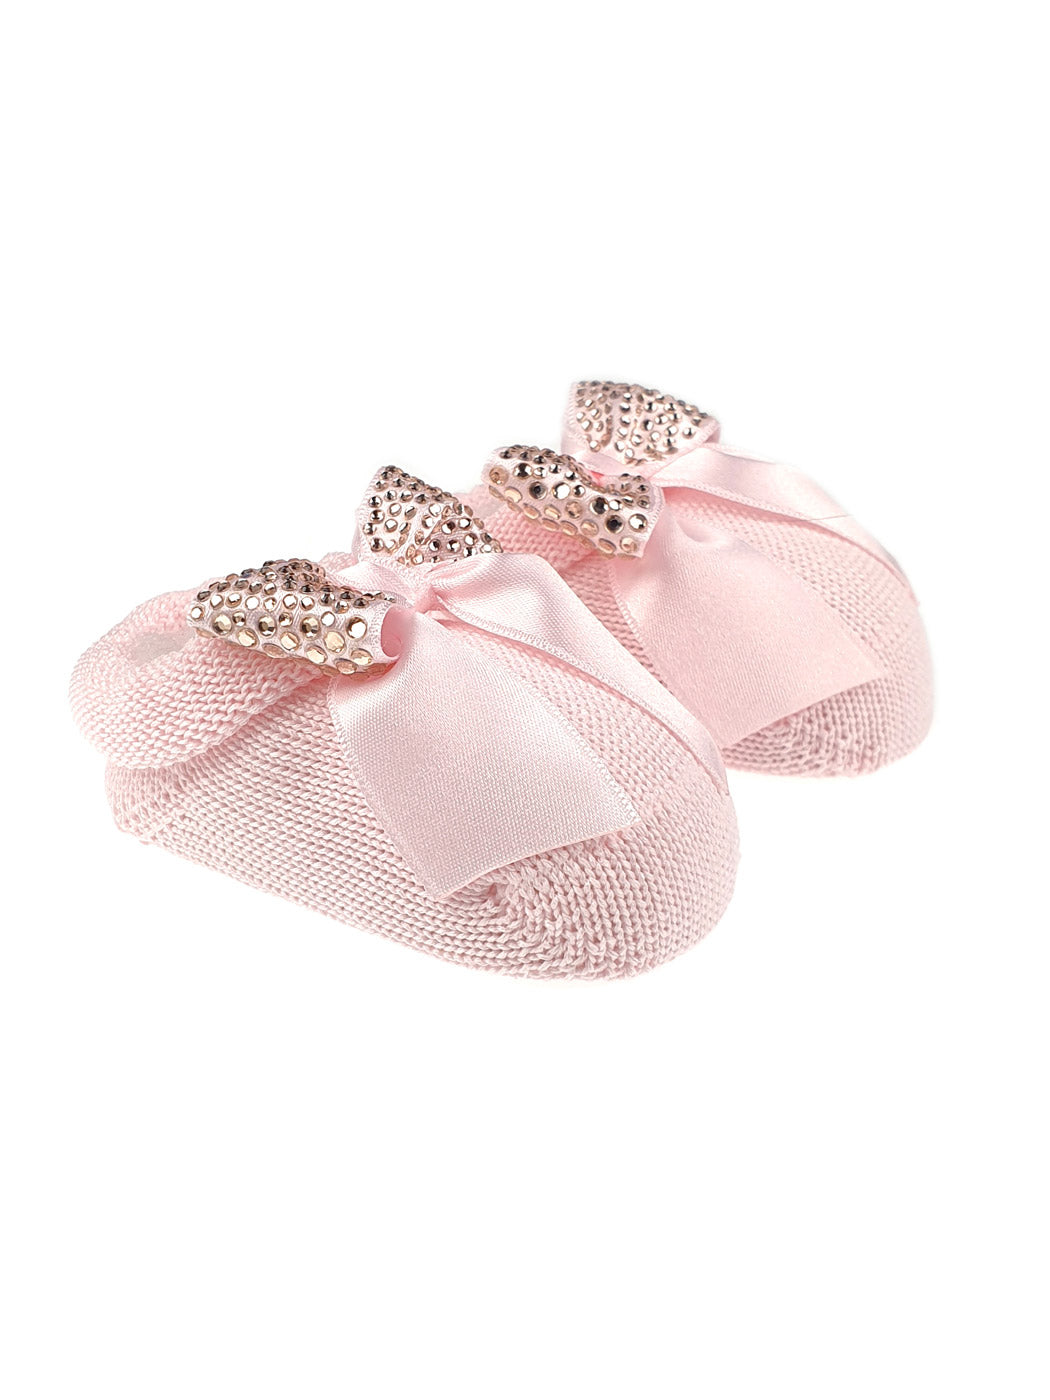 STORY LORIS - Baby Girls pink Booties & Headband Gift-31002